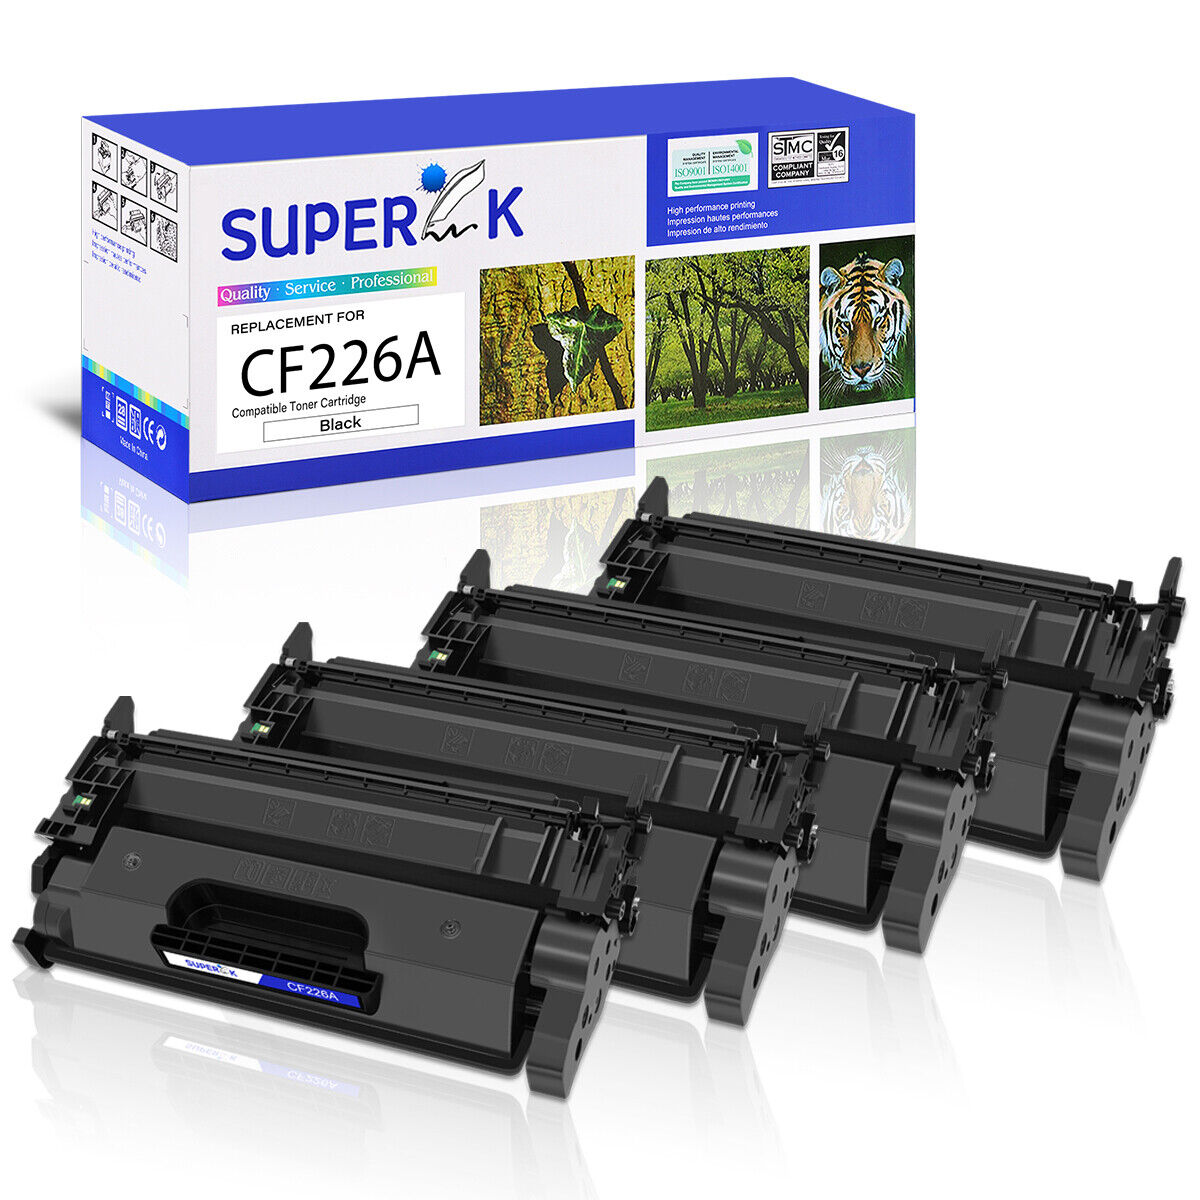 CF226A Toner Cartridge For HP 26A LaserJet Pro M402n M402dn MFP M426fdn M426fdw